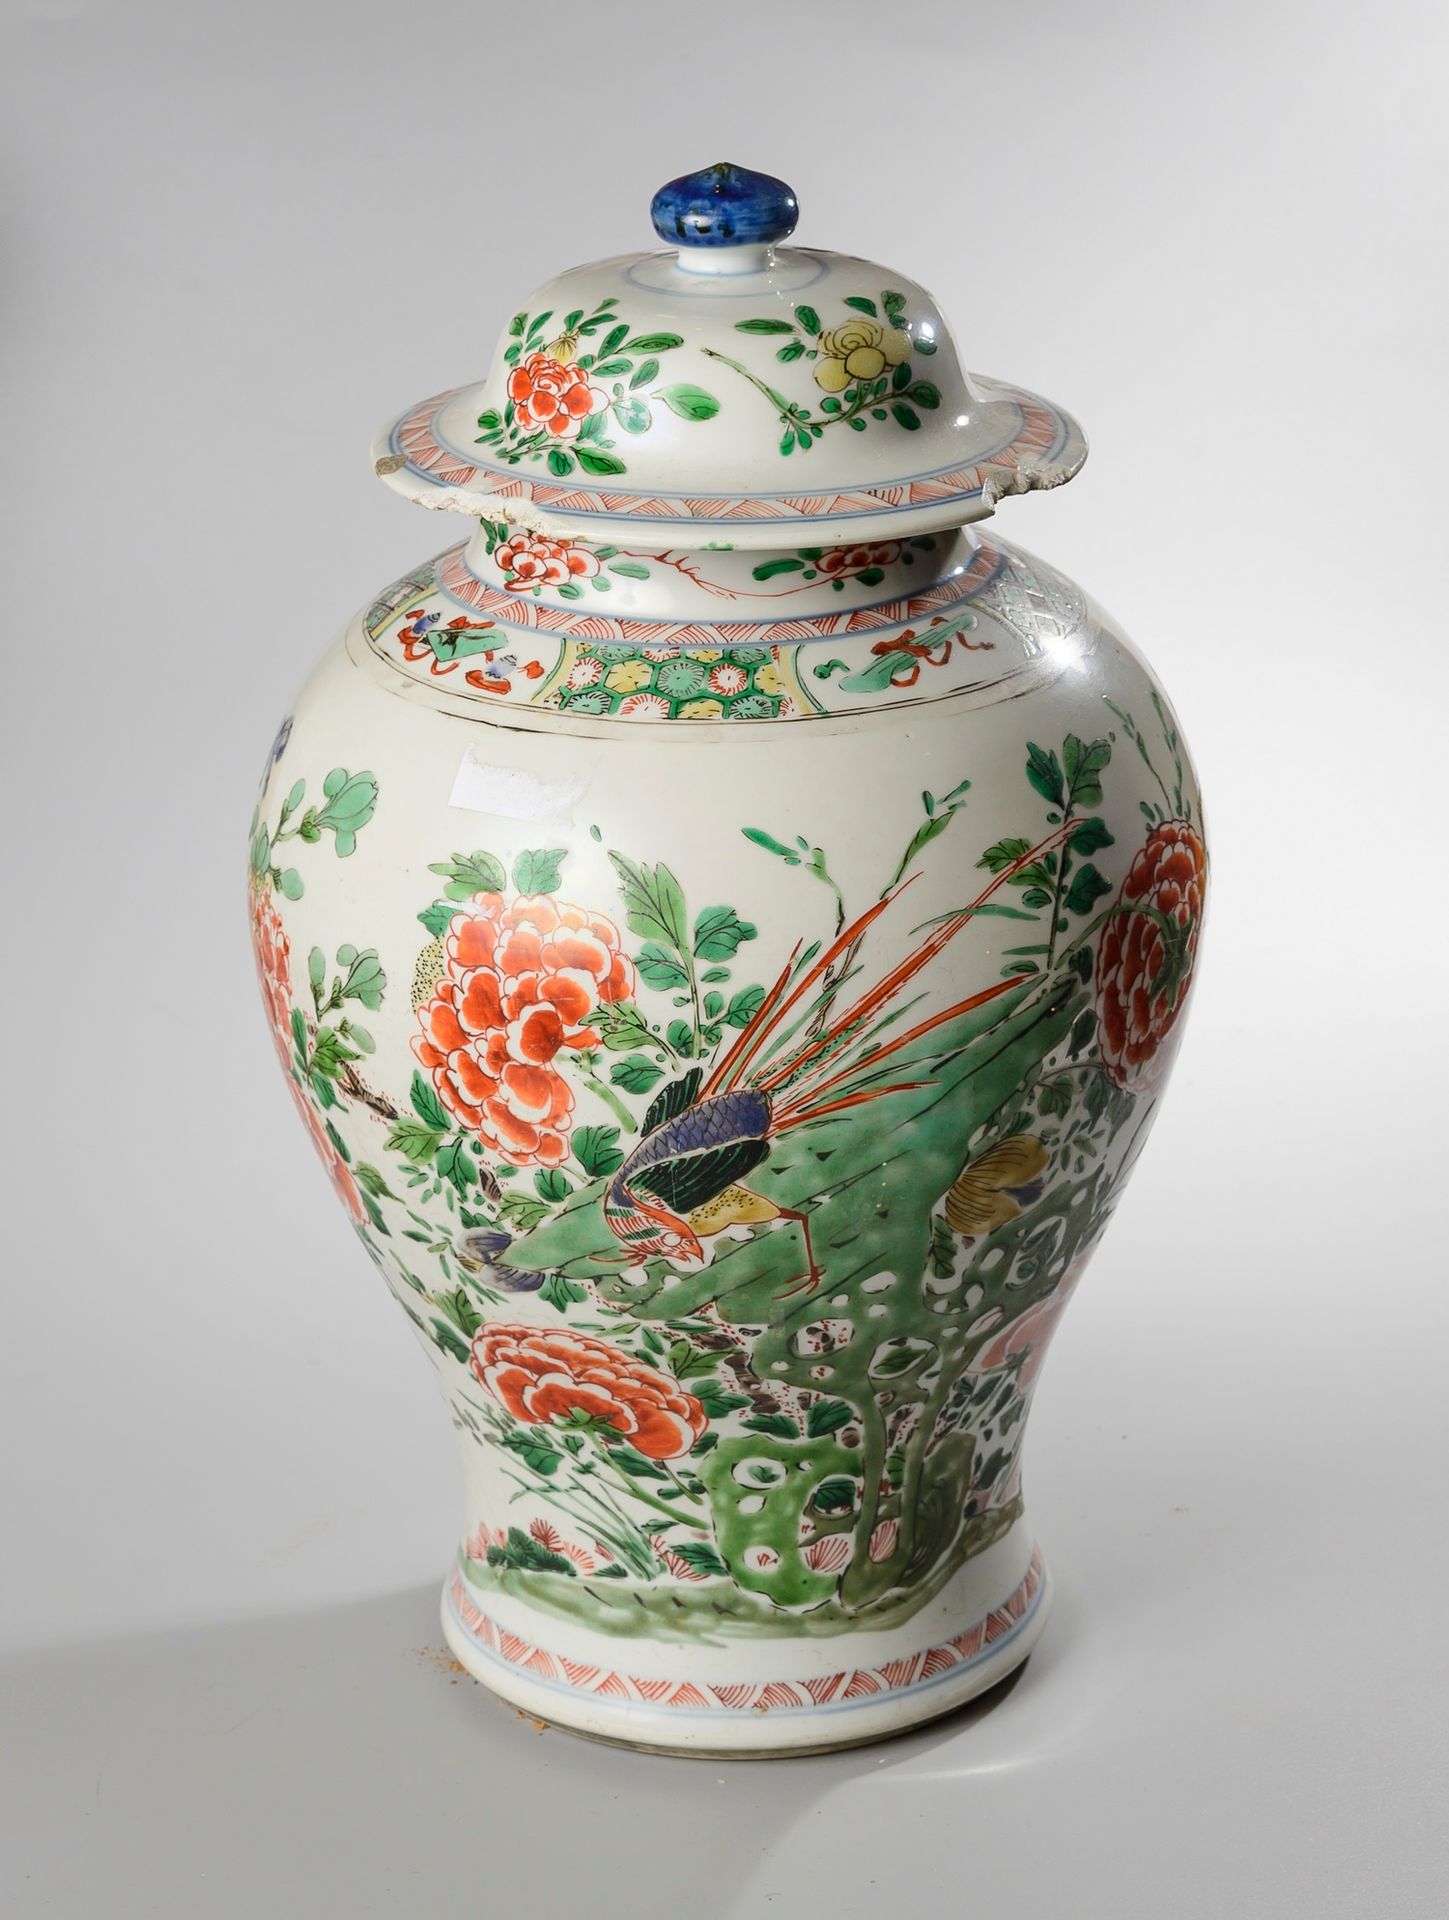 Null 中国，19世纪末，20世纪初。

两件珐琅彩瓷壶，花中有鸟的多色装饰。高度：37和38厘米。

缺少，有缺口和胶水。一个盖子不见了，第二个盖子非常损坏&hellip;